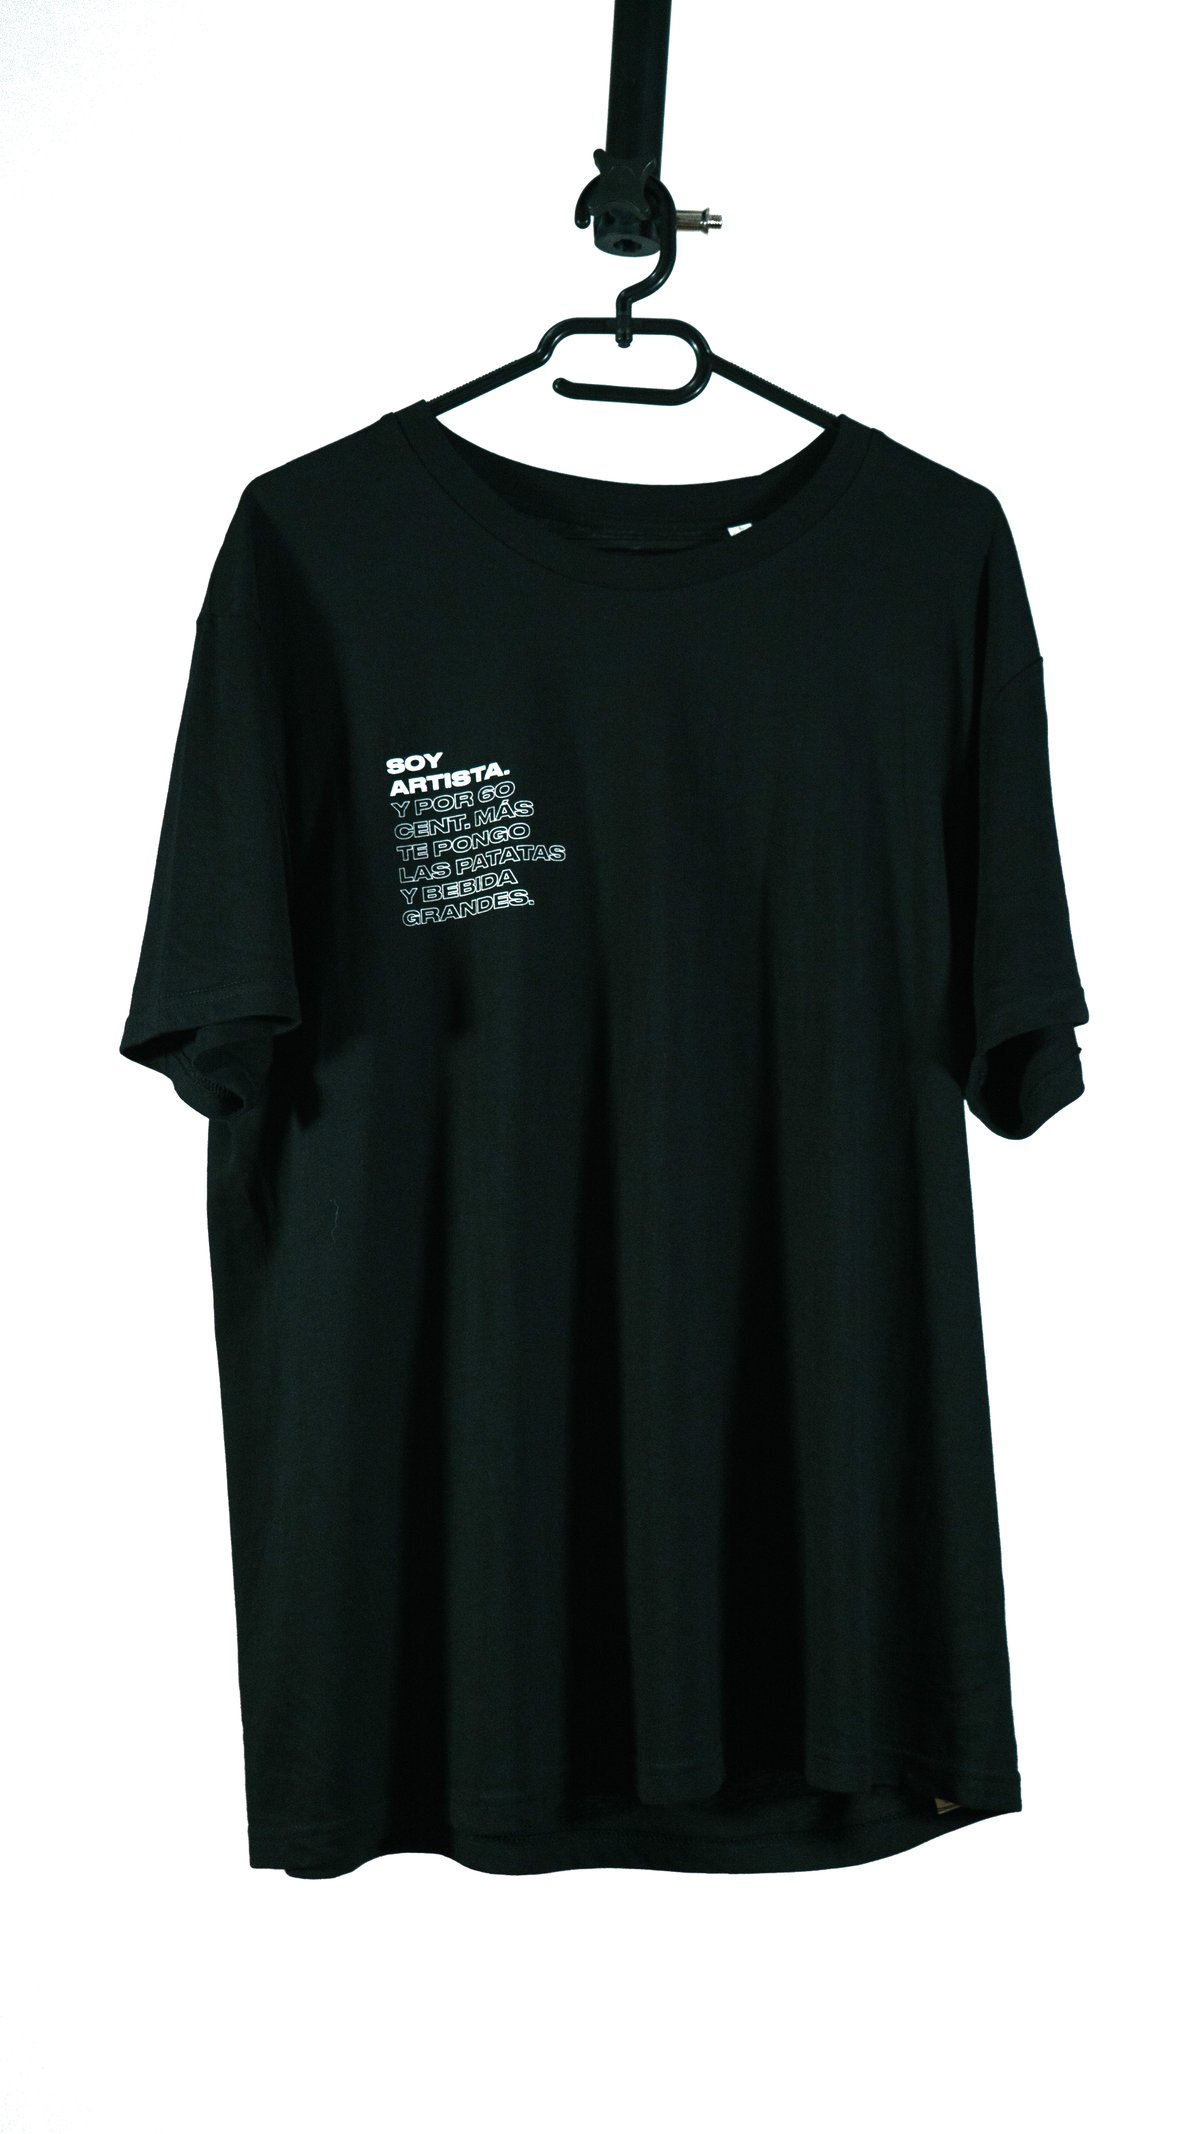 Image of Soy artista (camiseta - black)